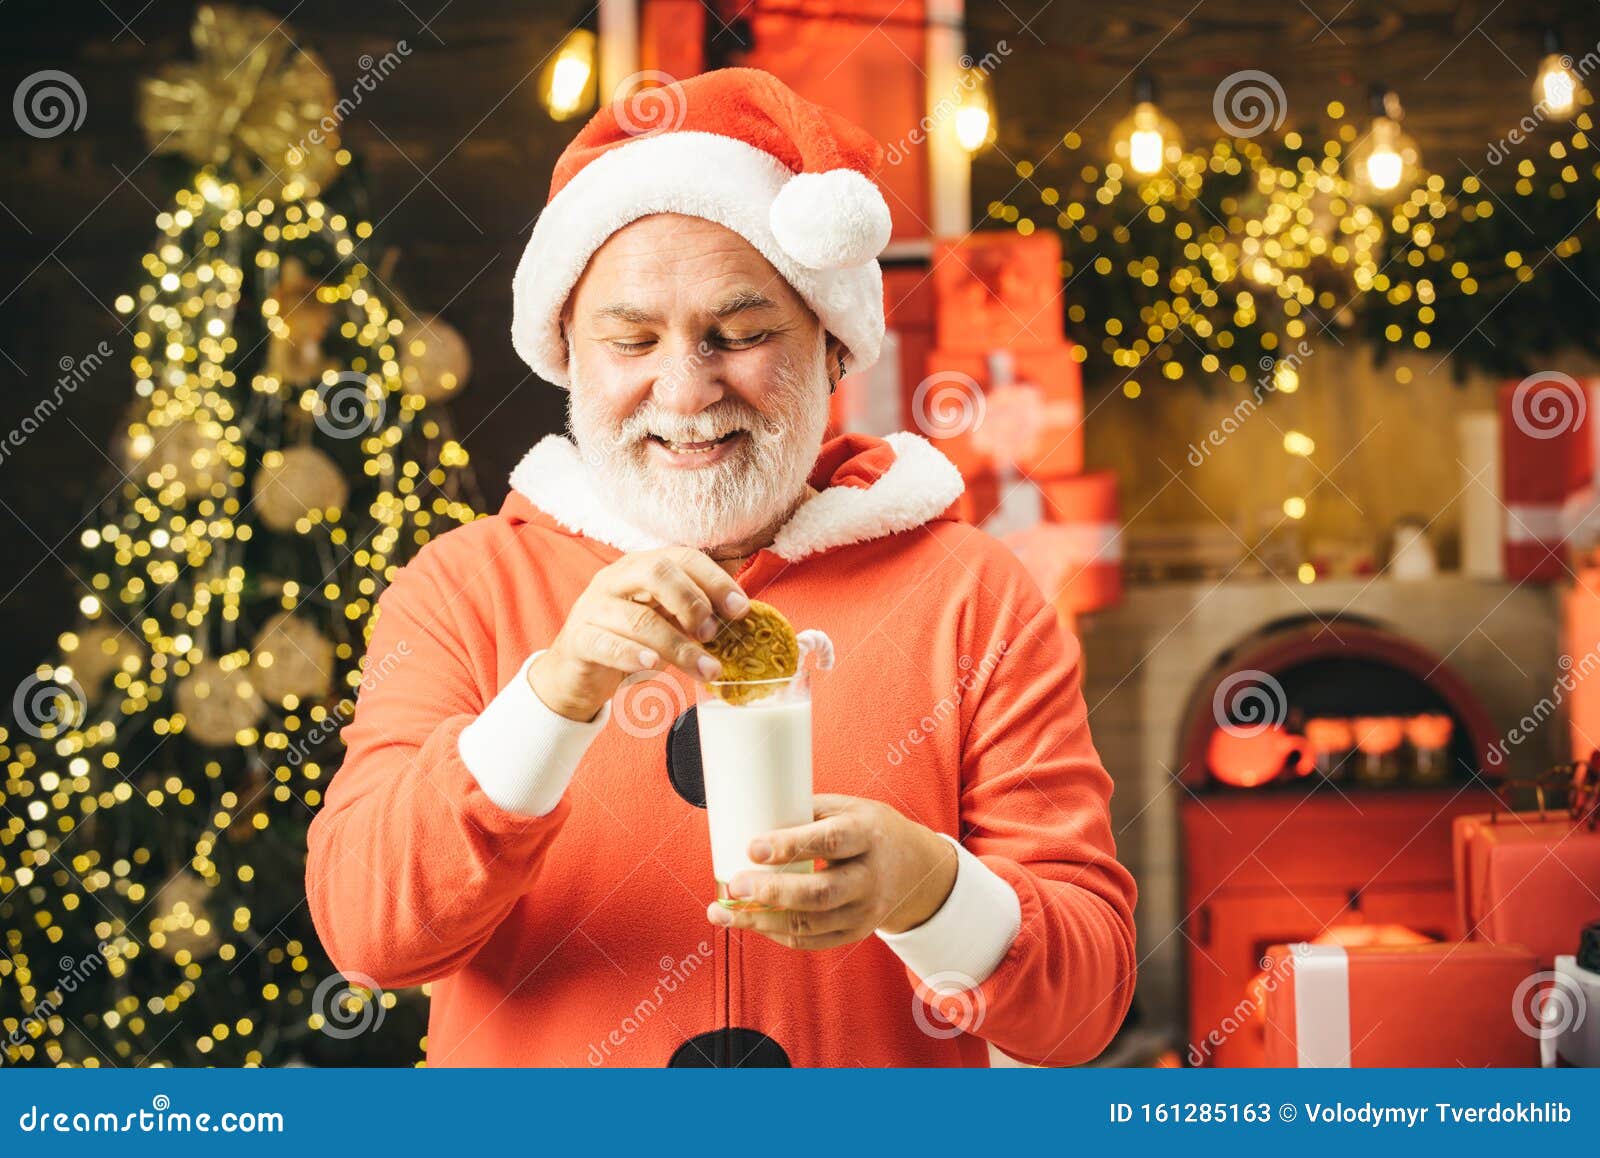 Papai Noel Segurando Biscoito E Copo De Leite No Fundo Da árvore De Natal  Papai Noel Com Biscoitos E Leite De Natal Imagem de Stock - Imagem de  batizado, barba: 161285163